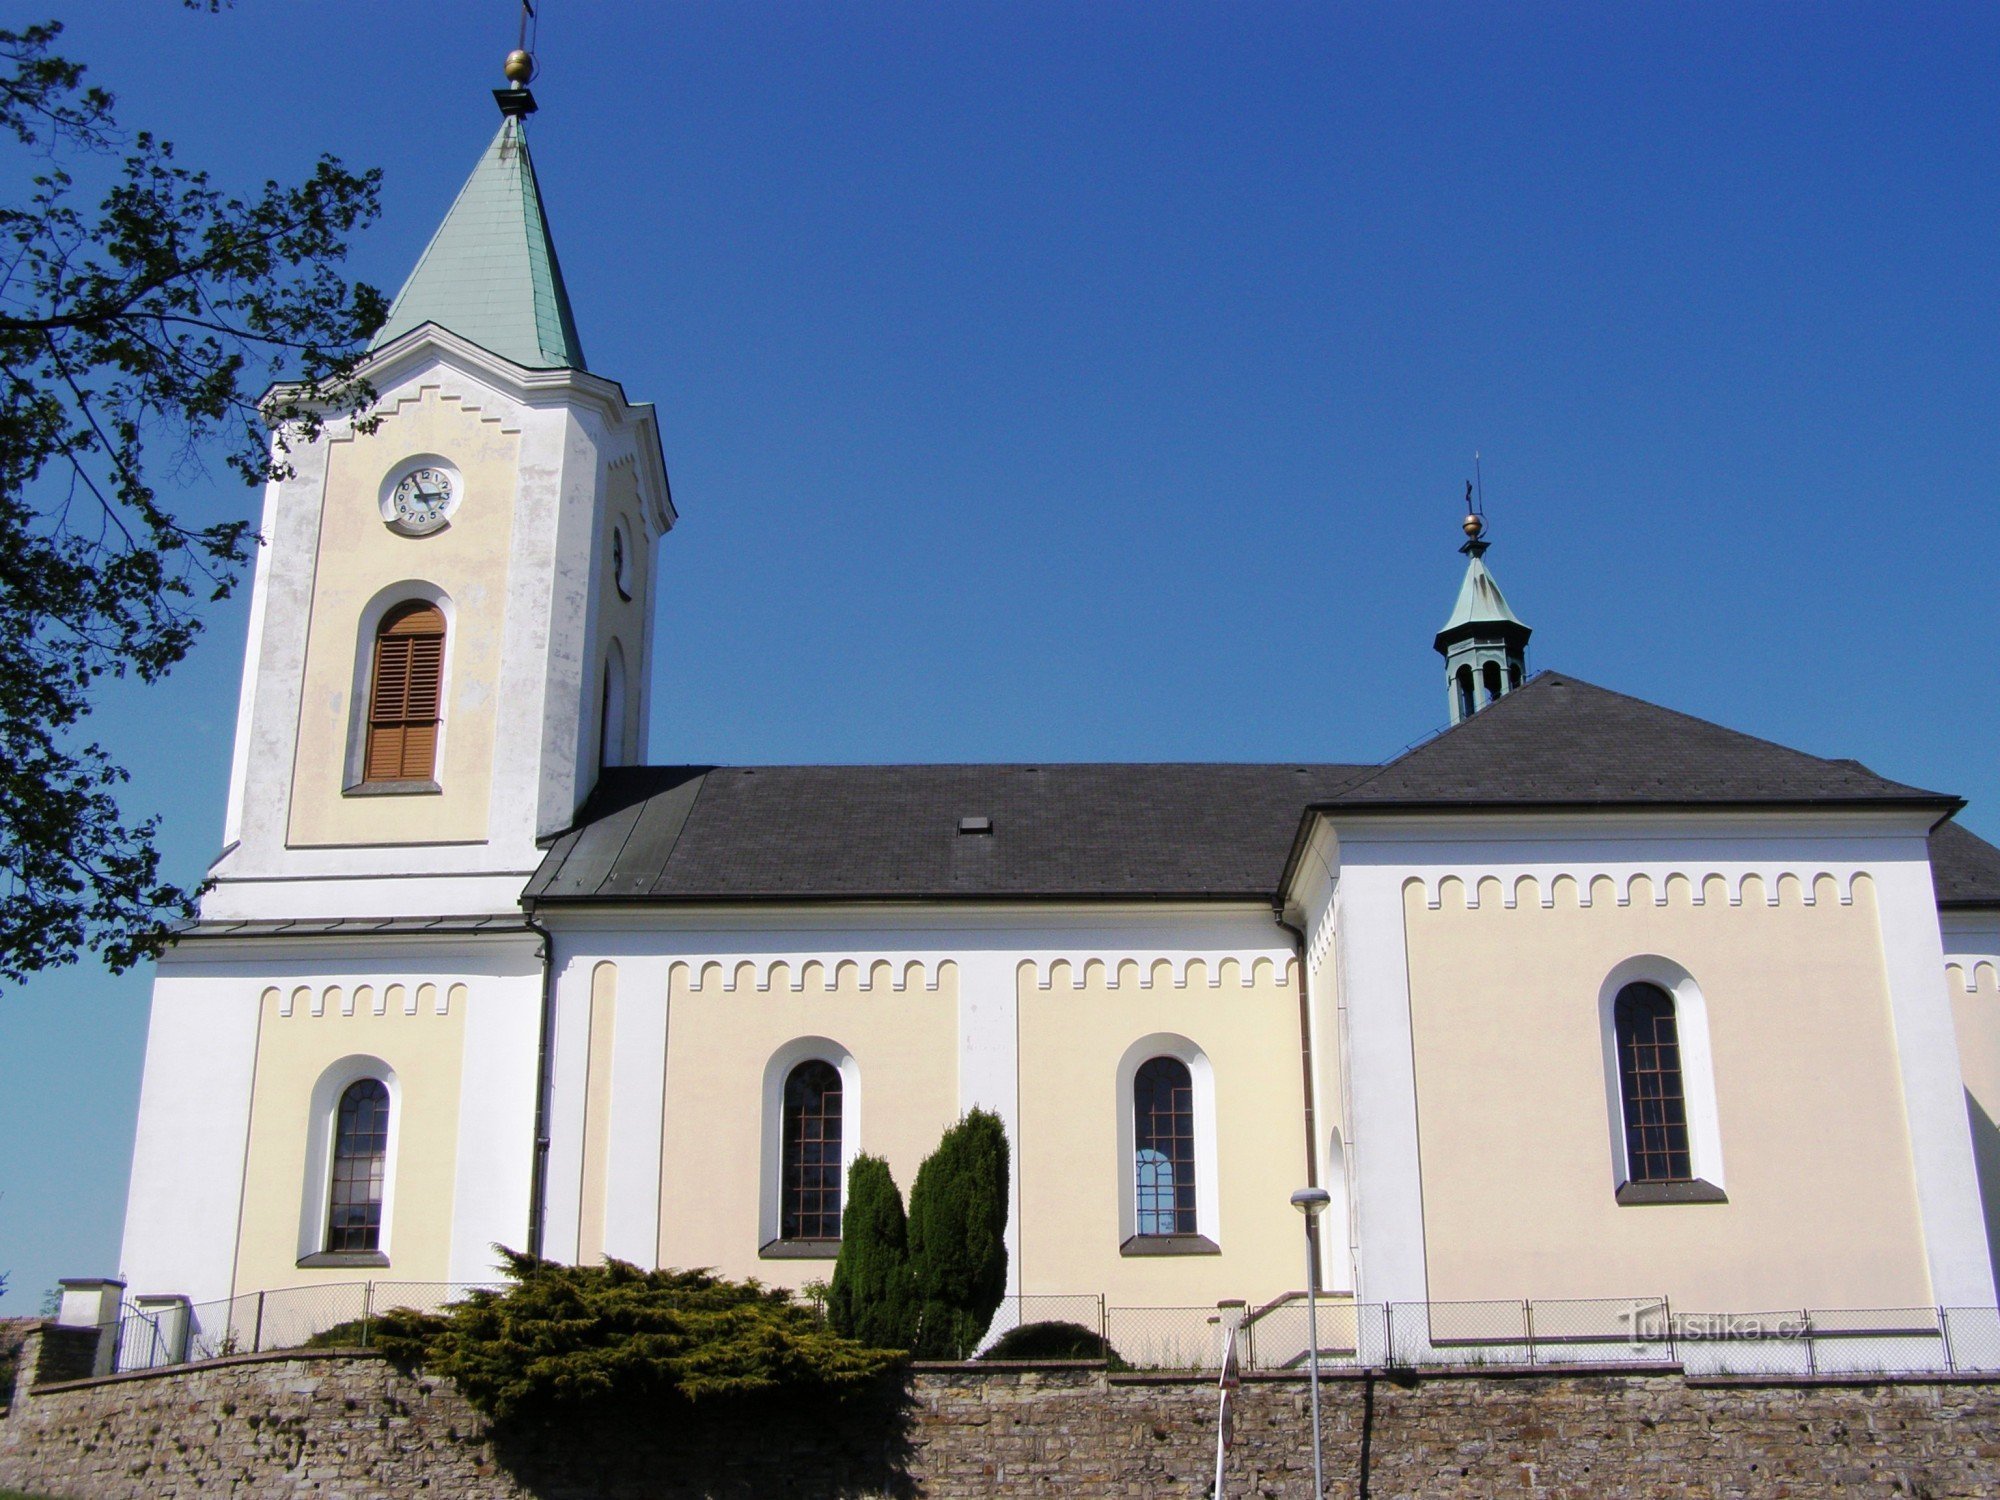 Voděrady - kirken St. Peter og Paul